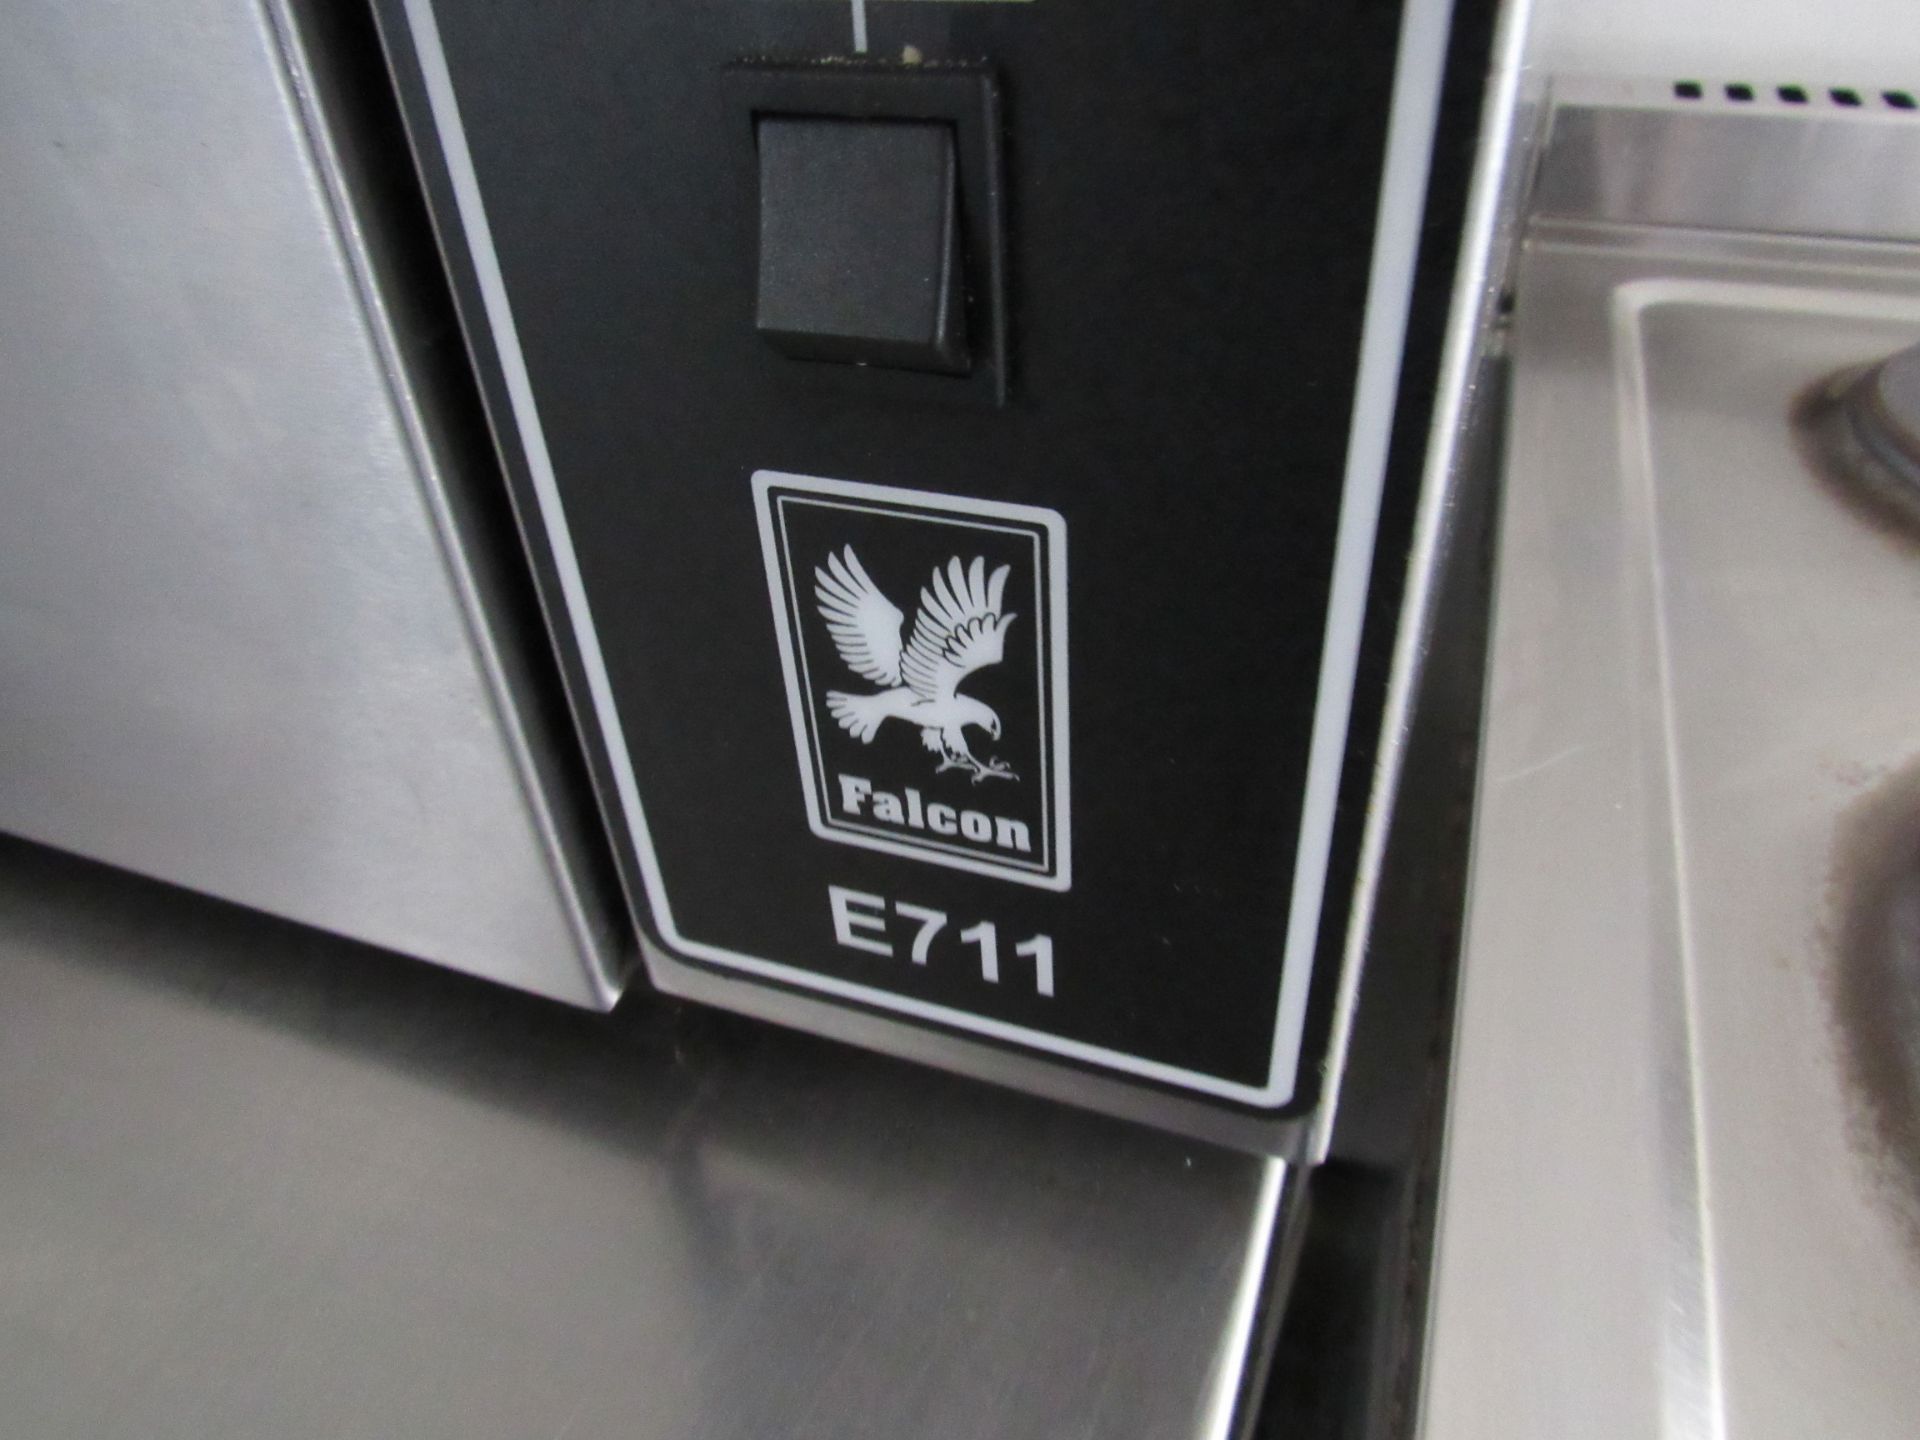 Falcon E711 countertop oven - Image 2 of 2